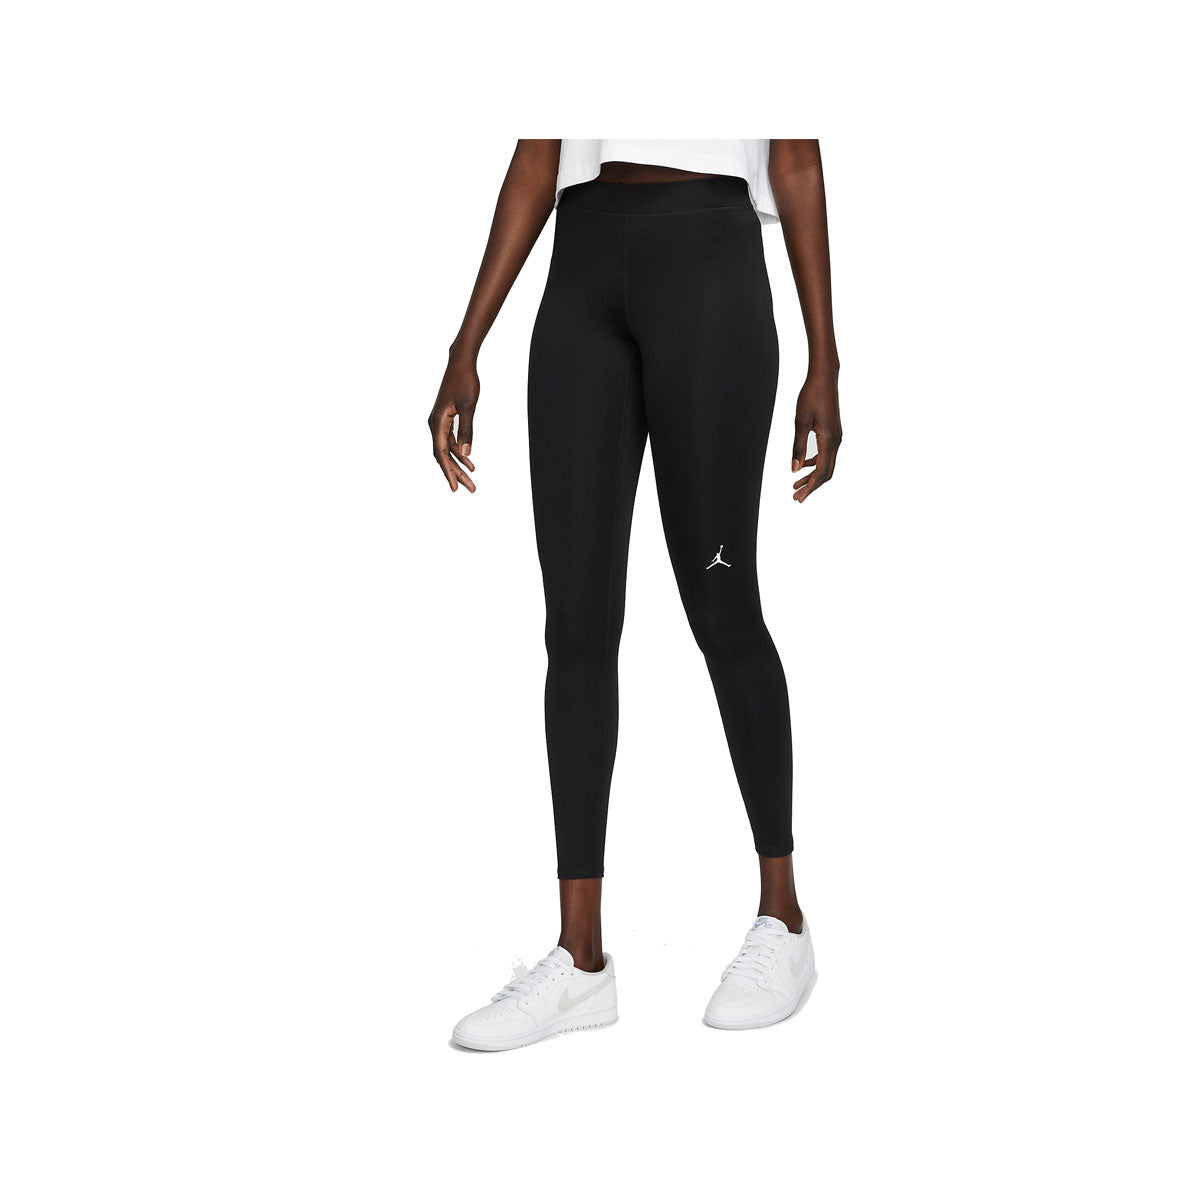 Air Jordan Women's Leggings Black - KickzStore